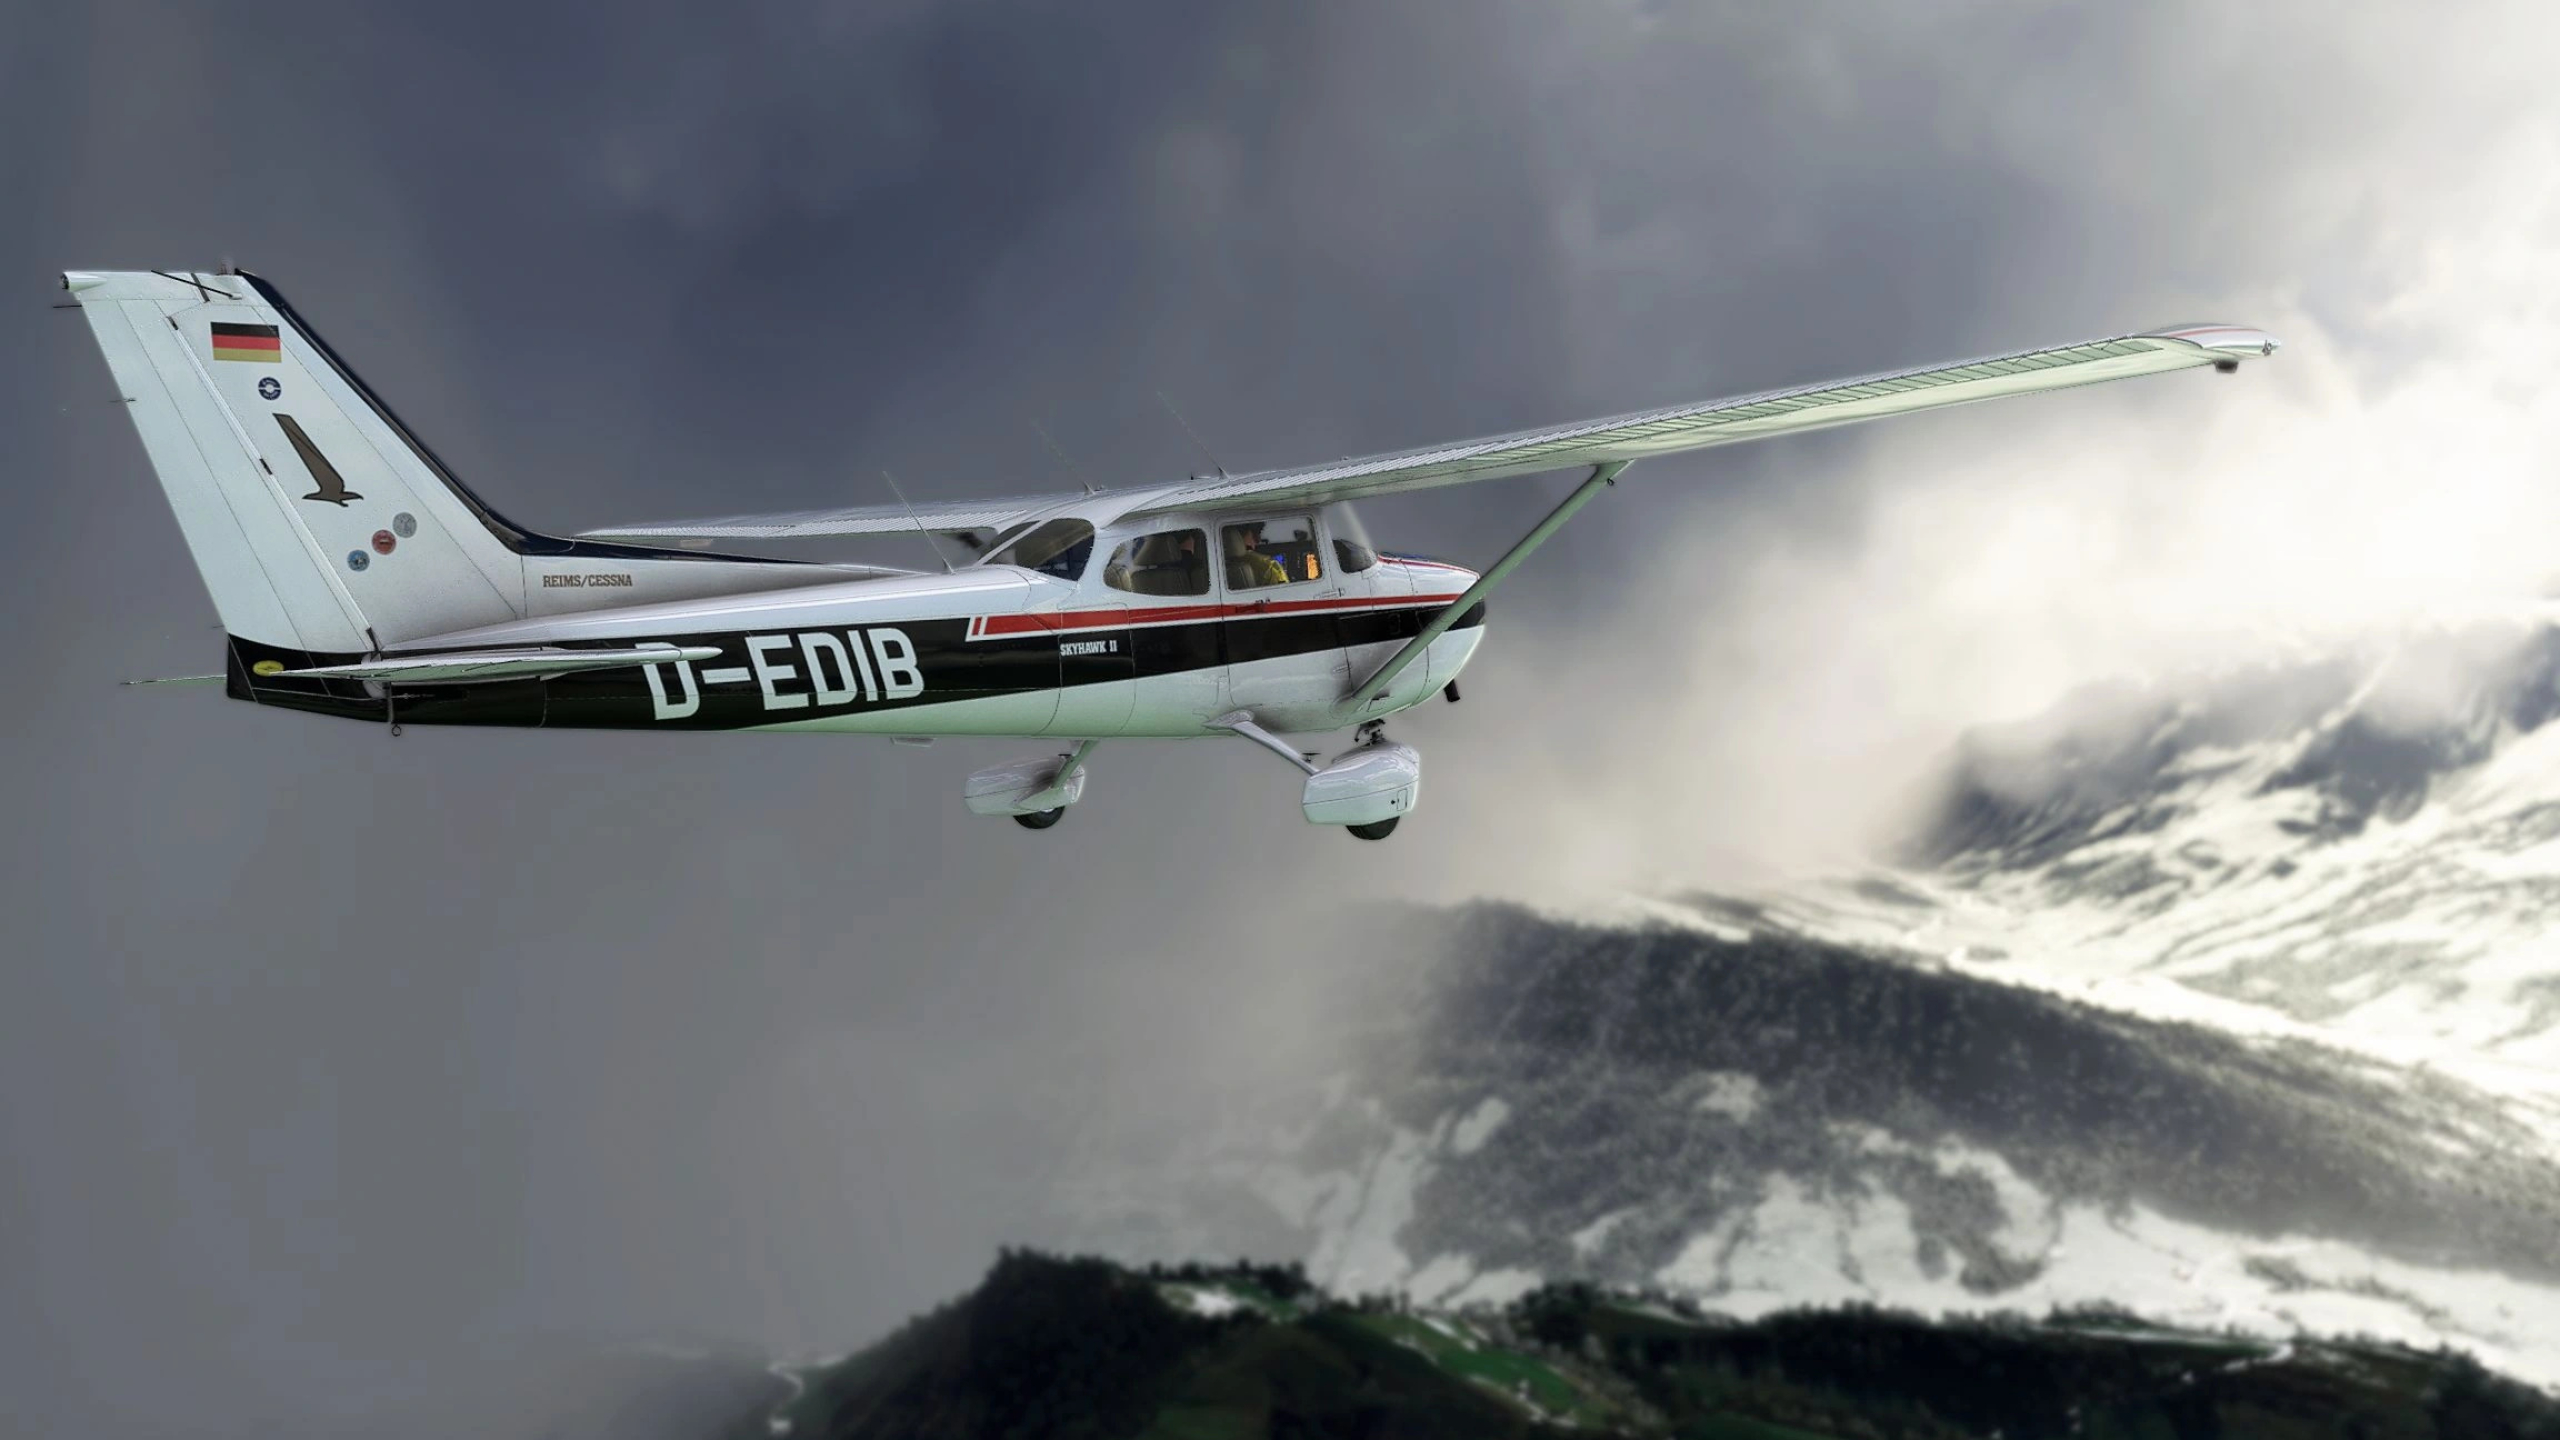 Reims-Cessna, Adventure in the skies, Aerial travel, Airplane exploration, 2560x1440 HD Desktop